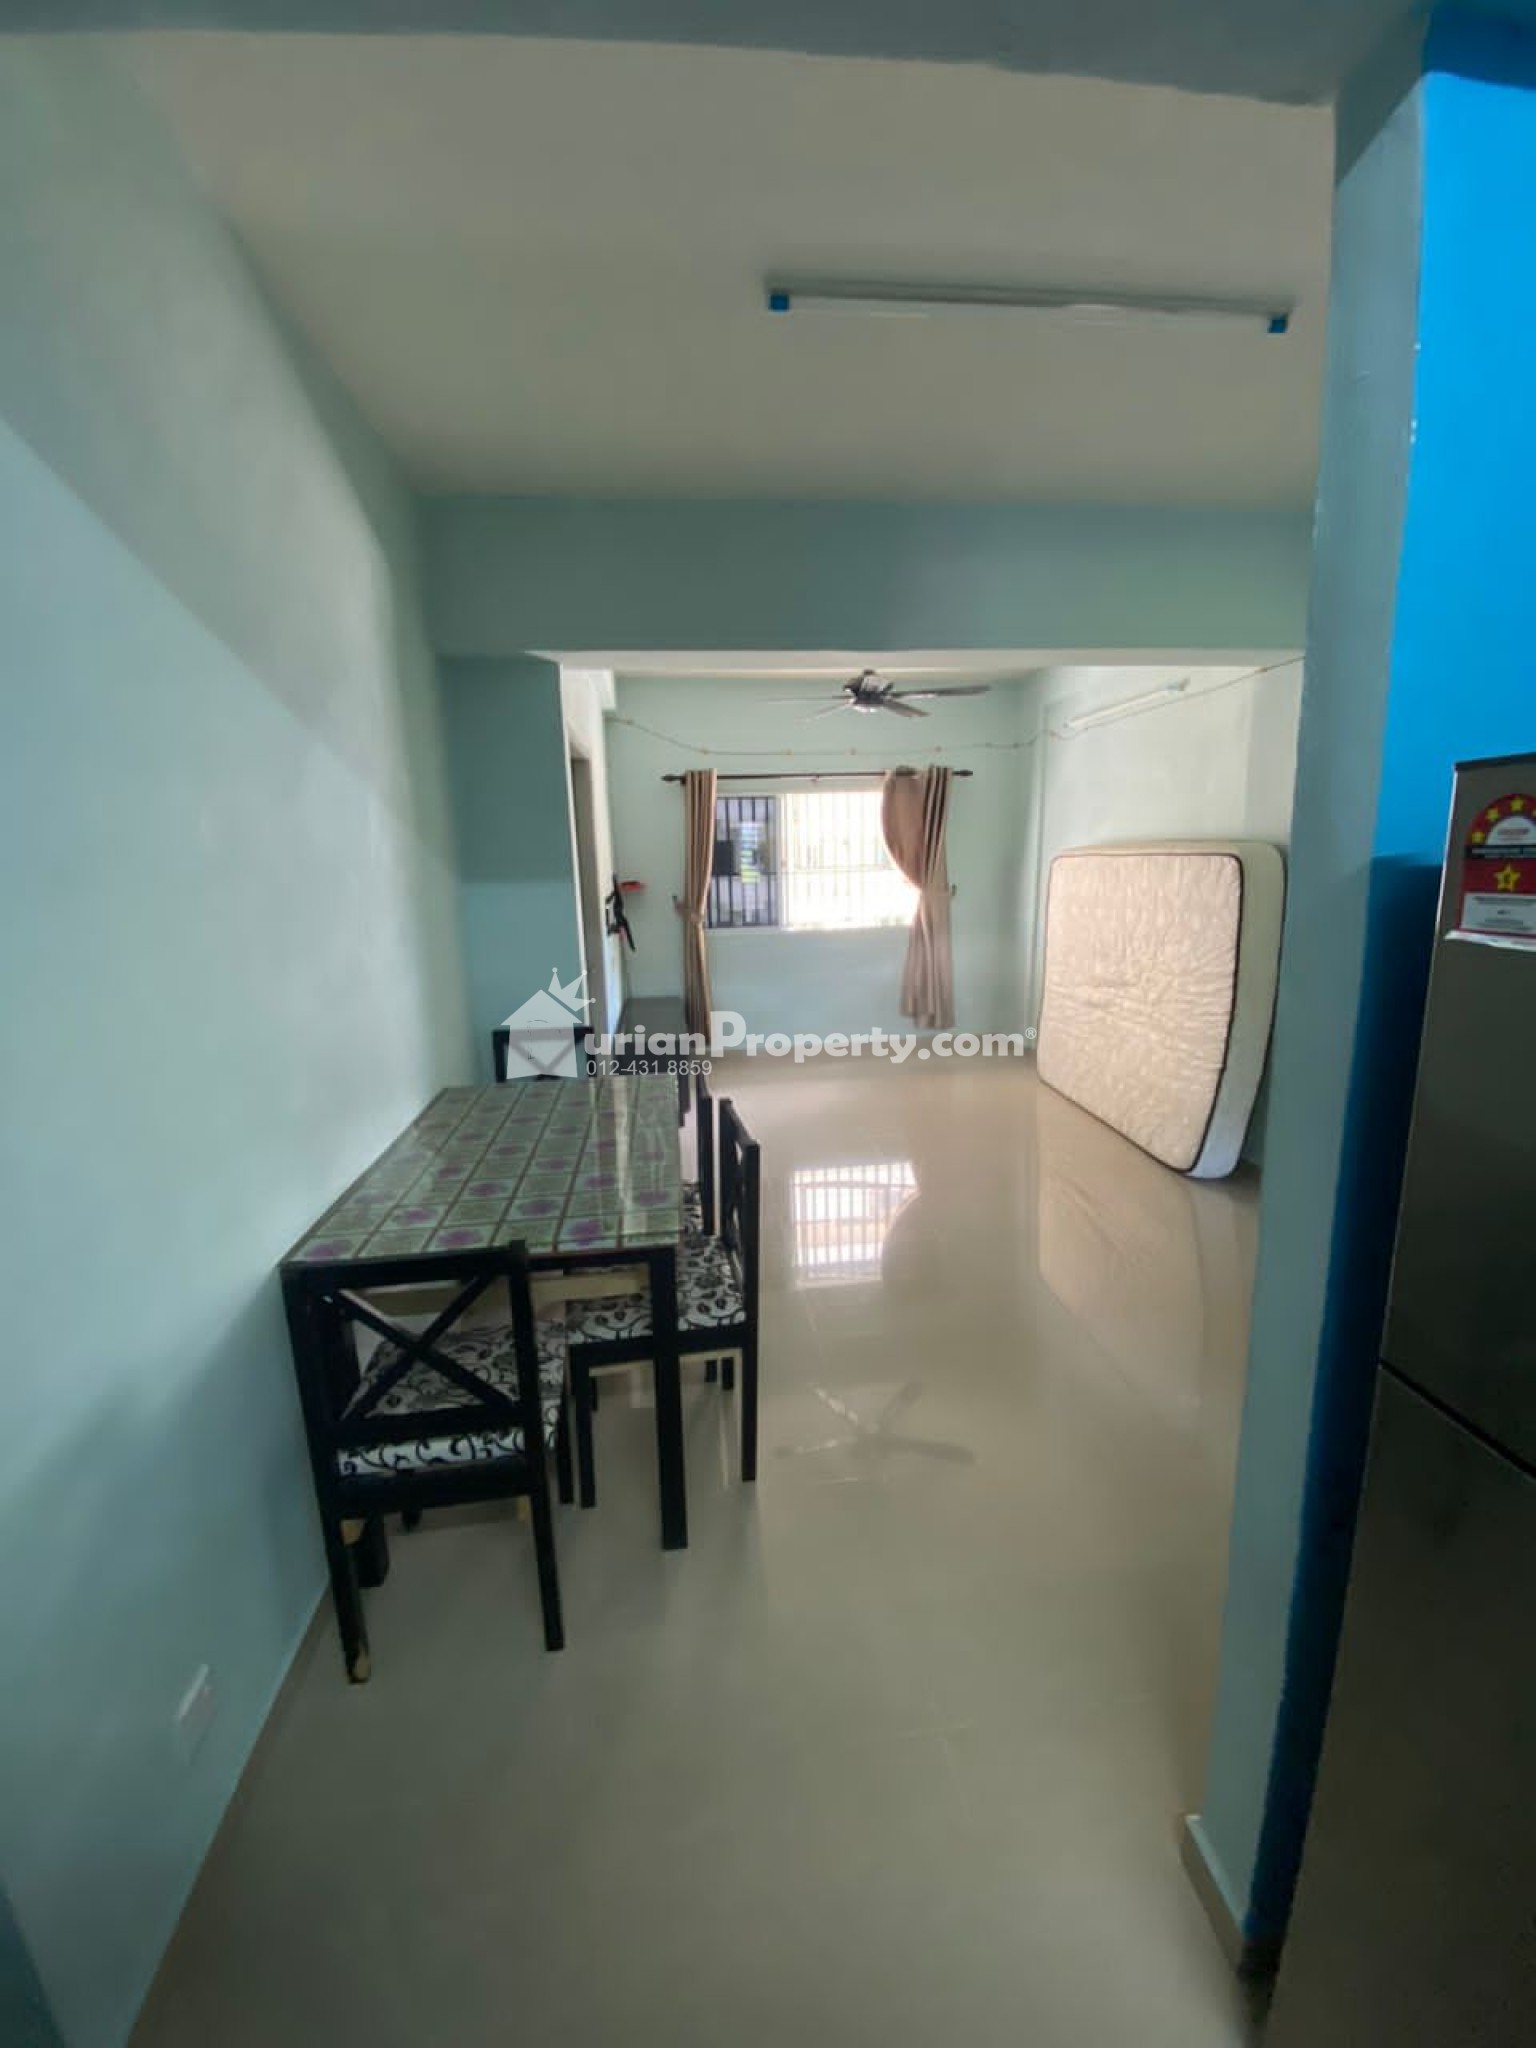 Apartment For Sale at Taman Terubong Indah